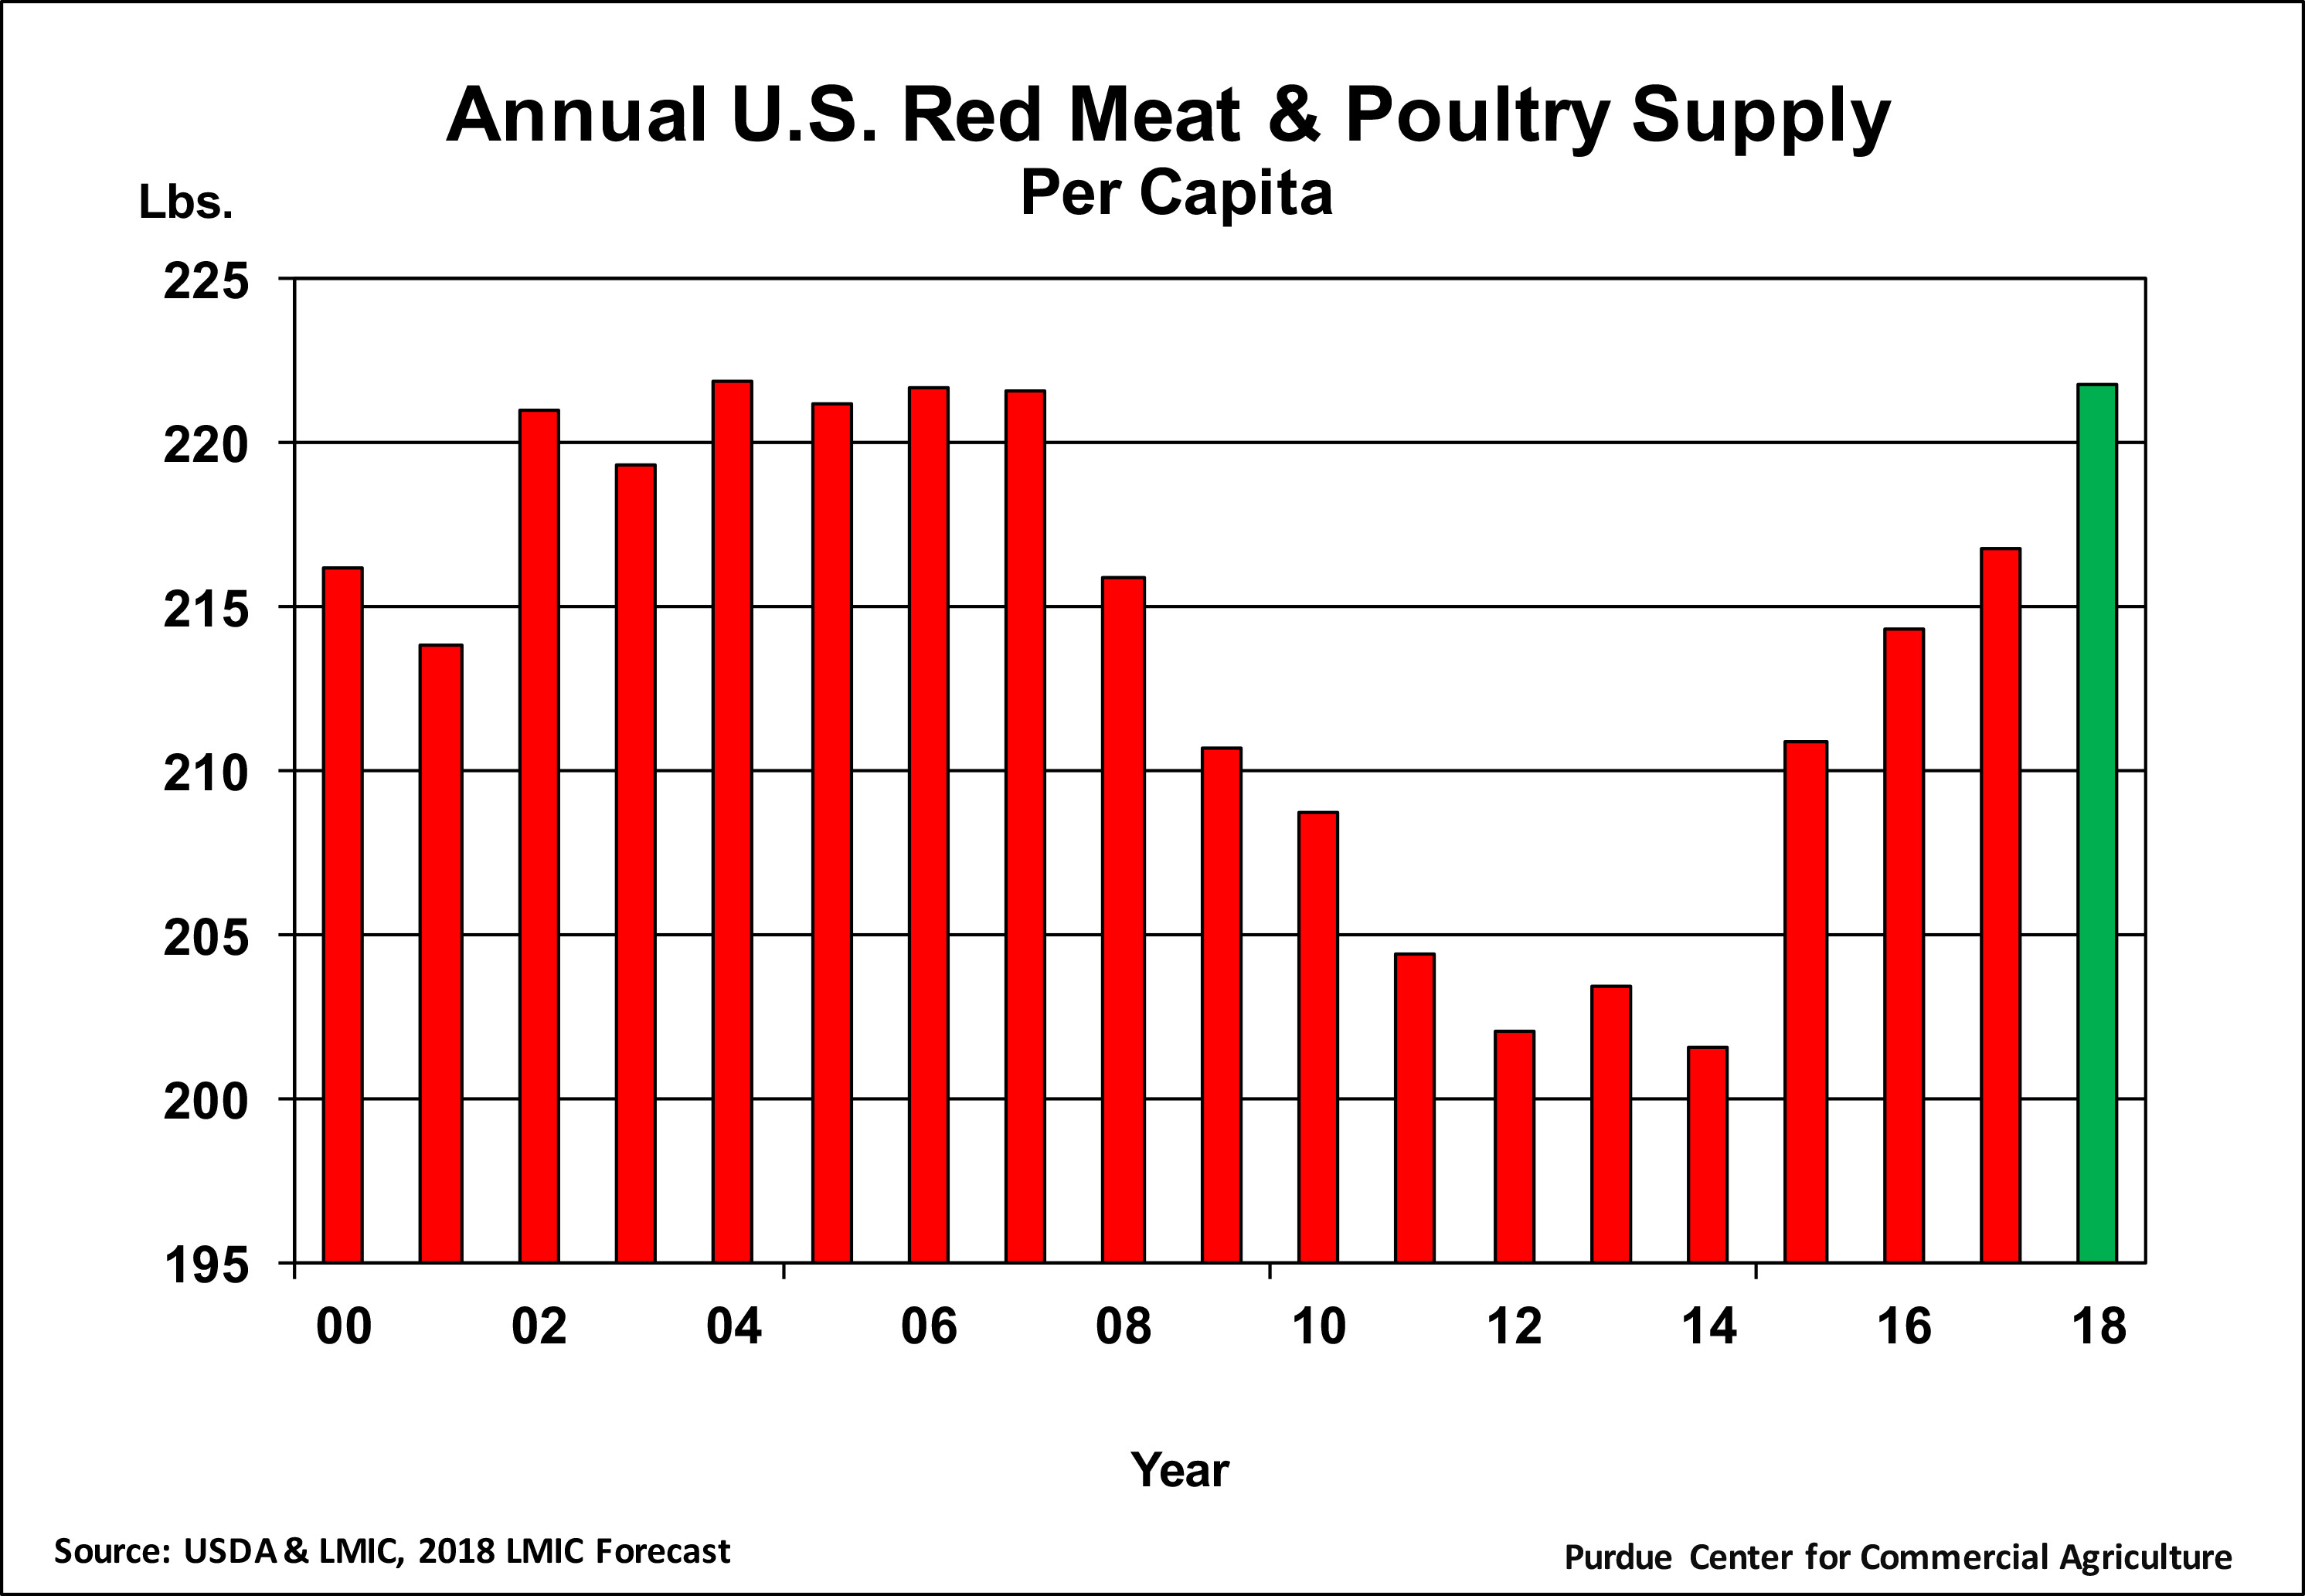 Annual U.S. Red Meat & Poultry Supply Per Capita